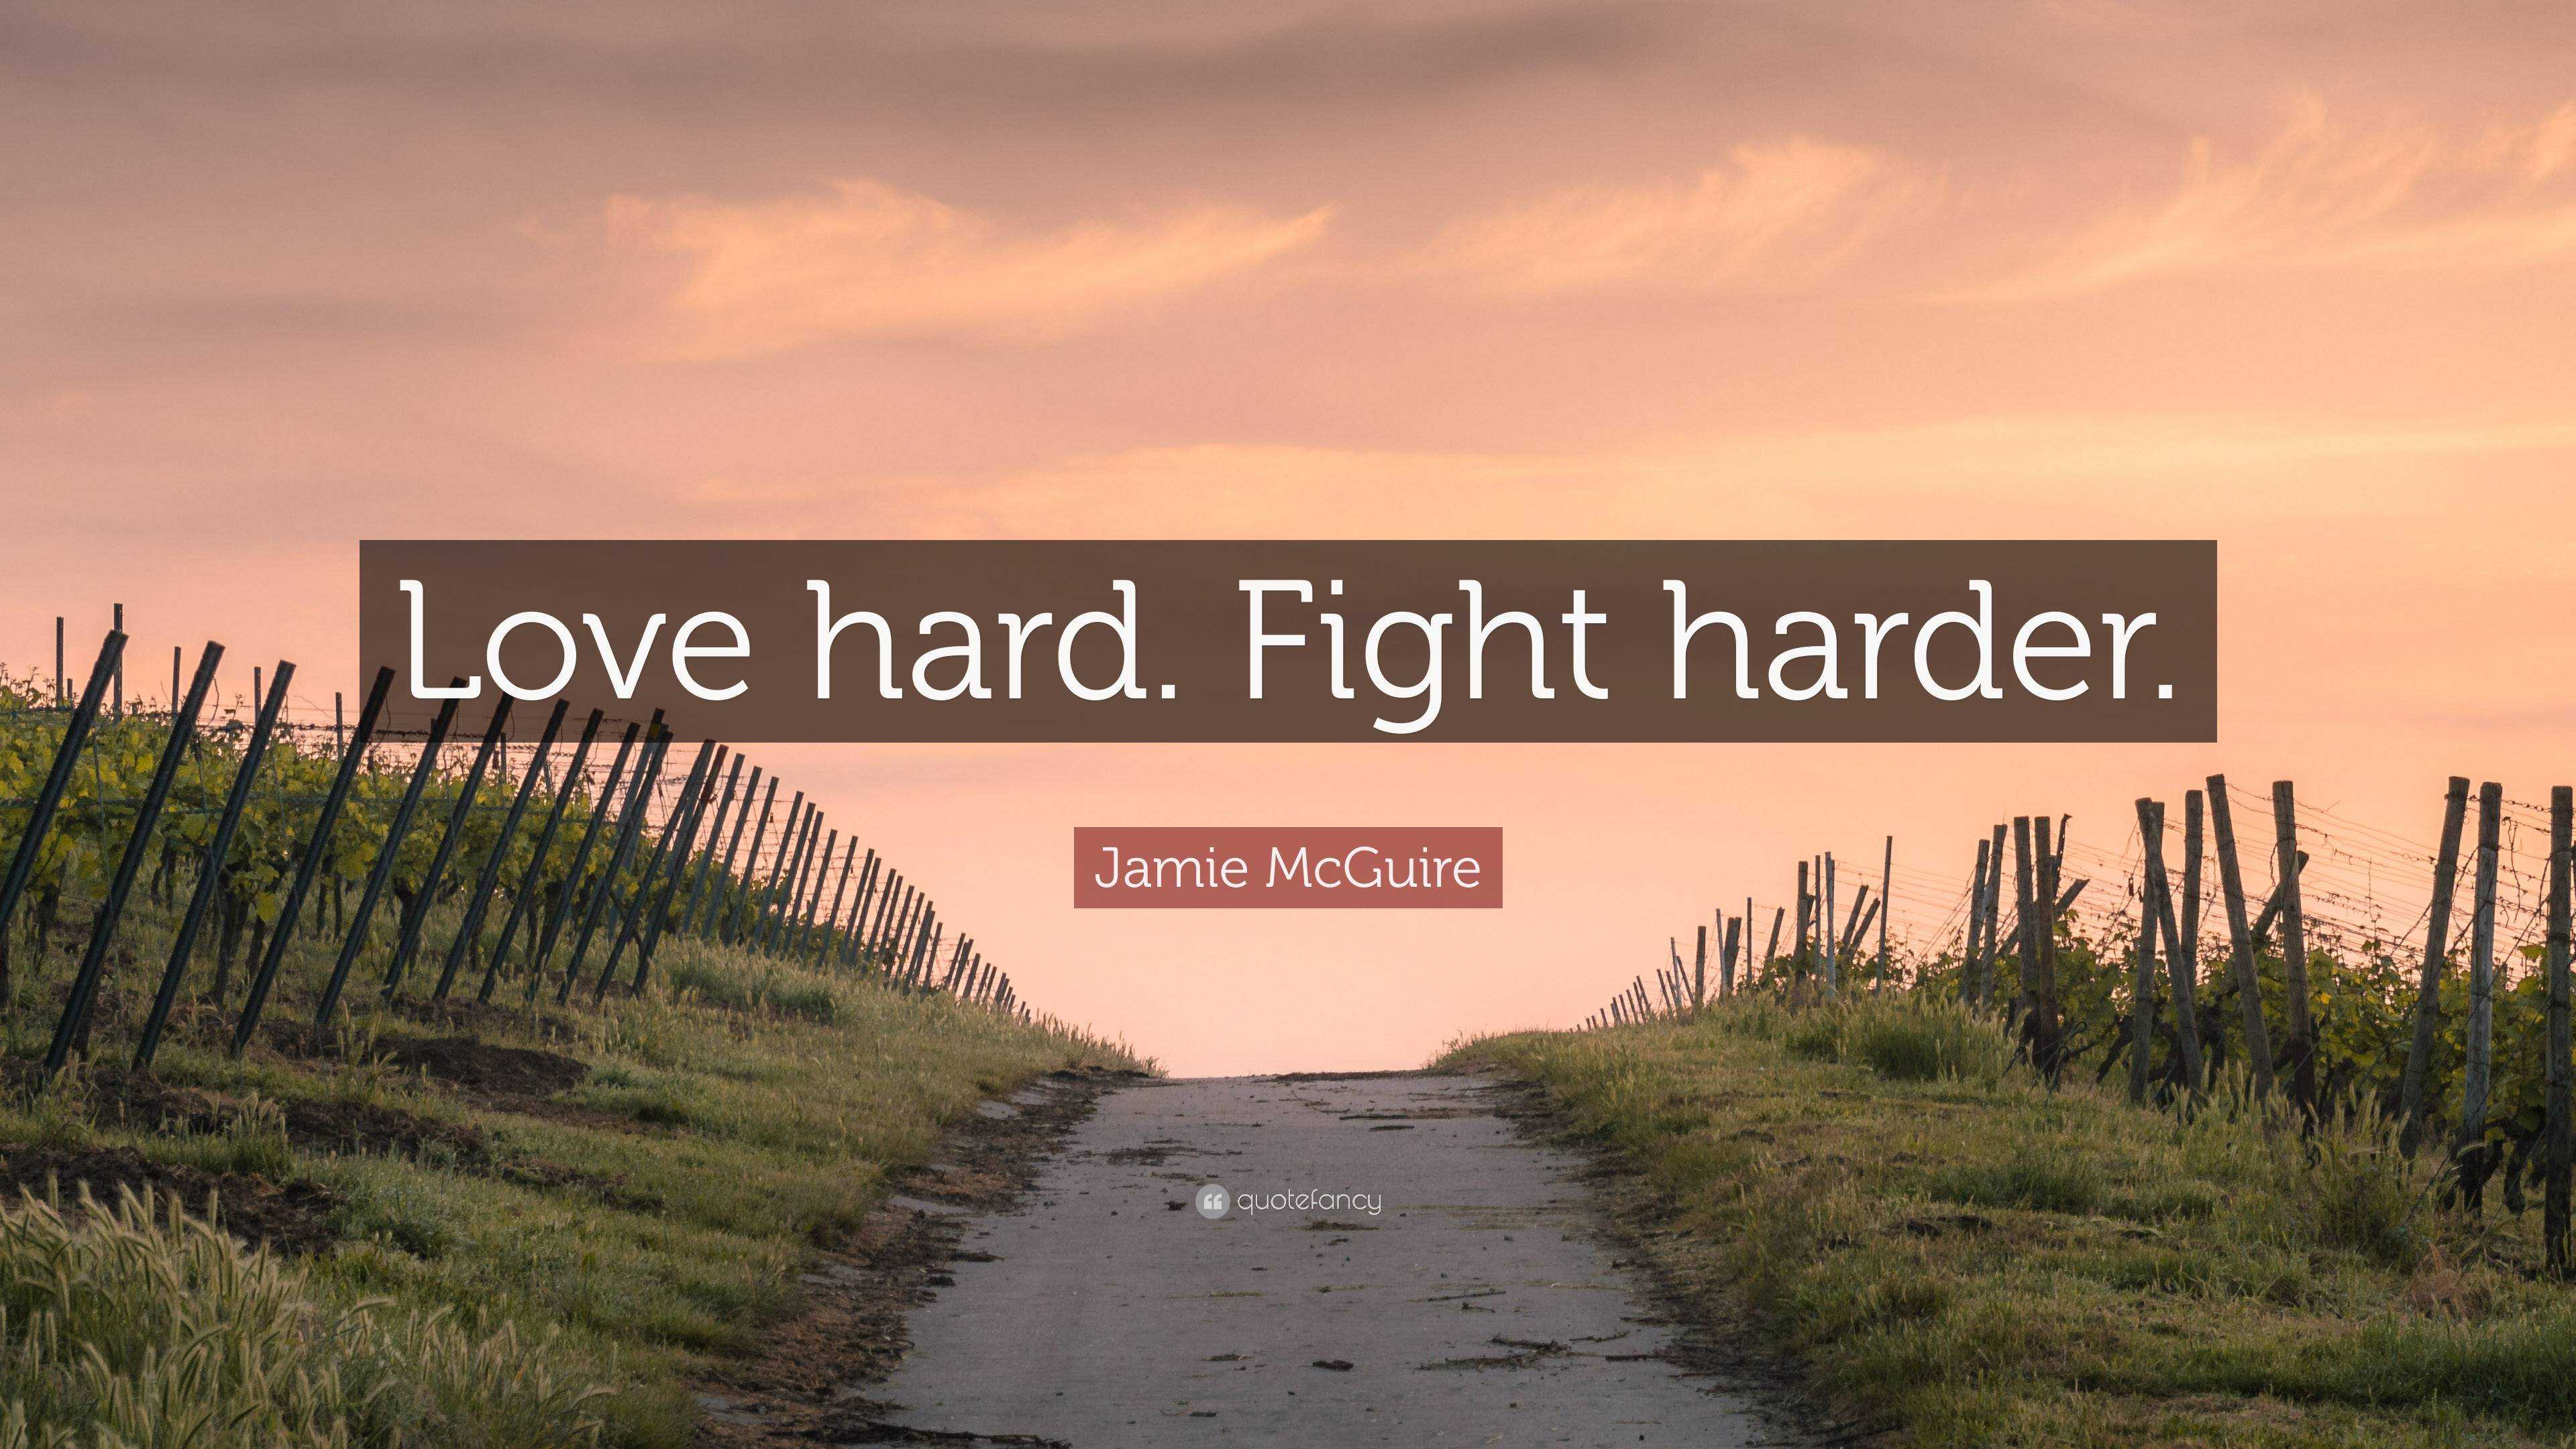 Jamie McGuire Quote: “Love hard. Fight harder.”